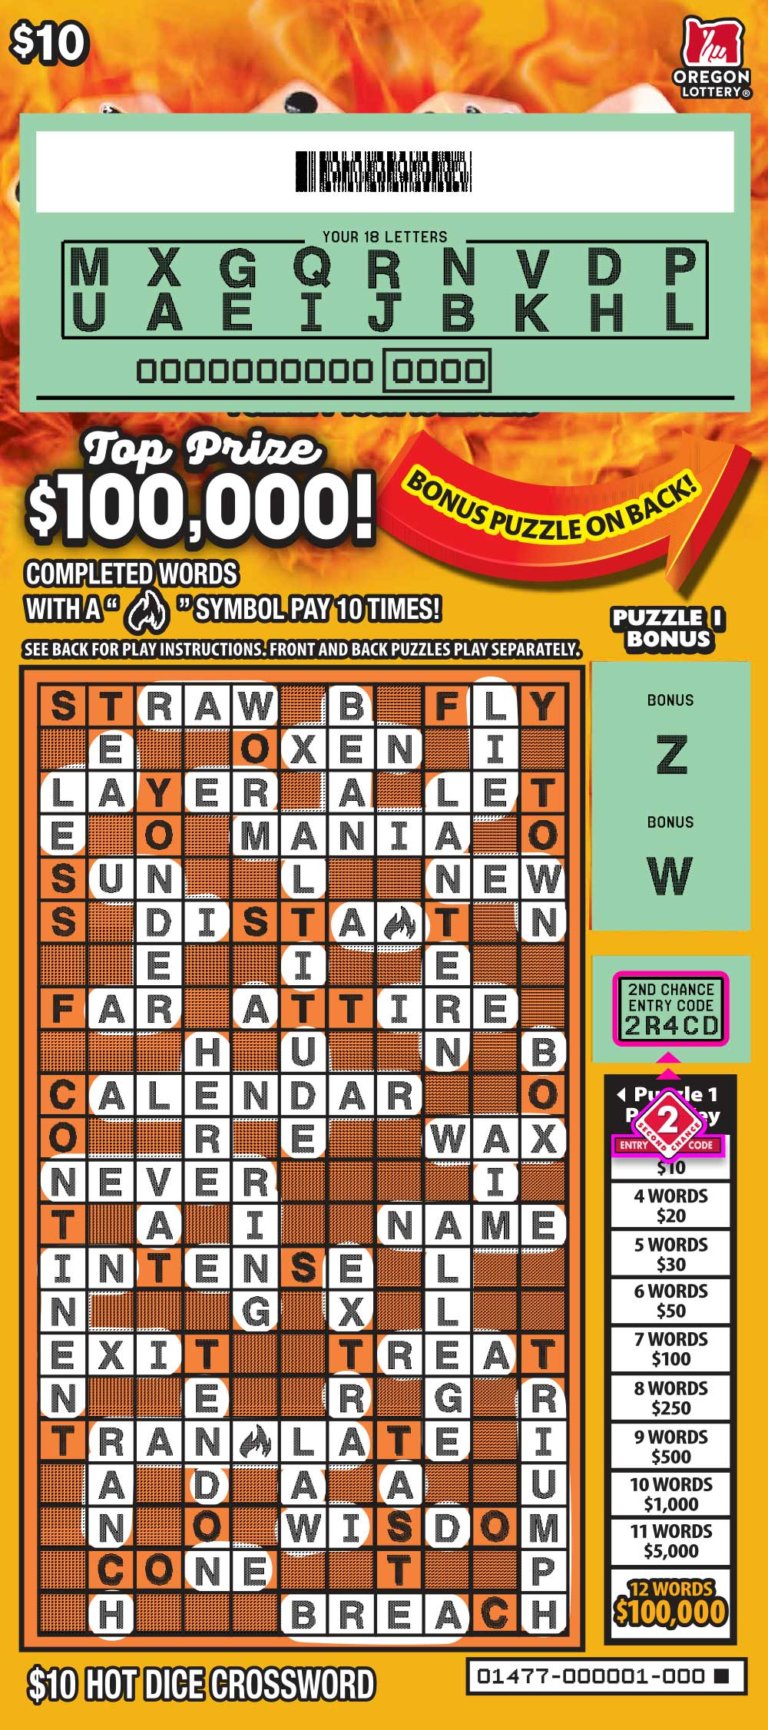 Hot Dice Crossword Lottery Scratch Tickets Oregon Lottery